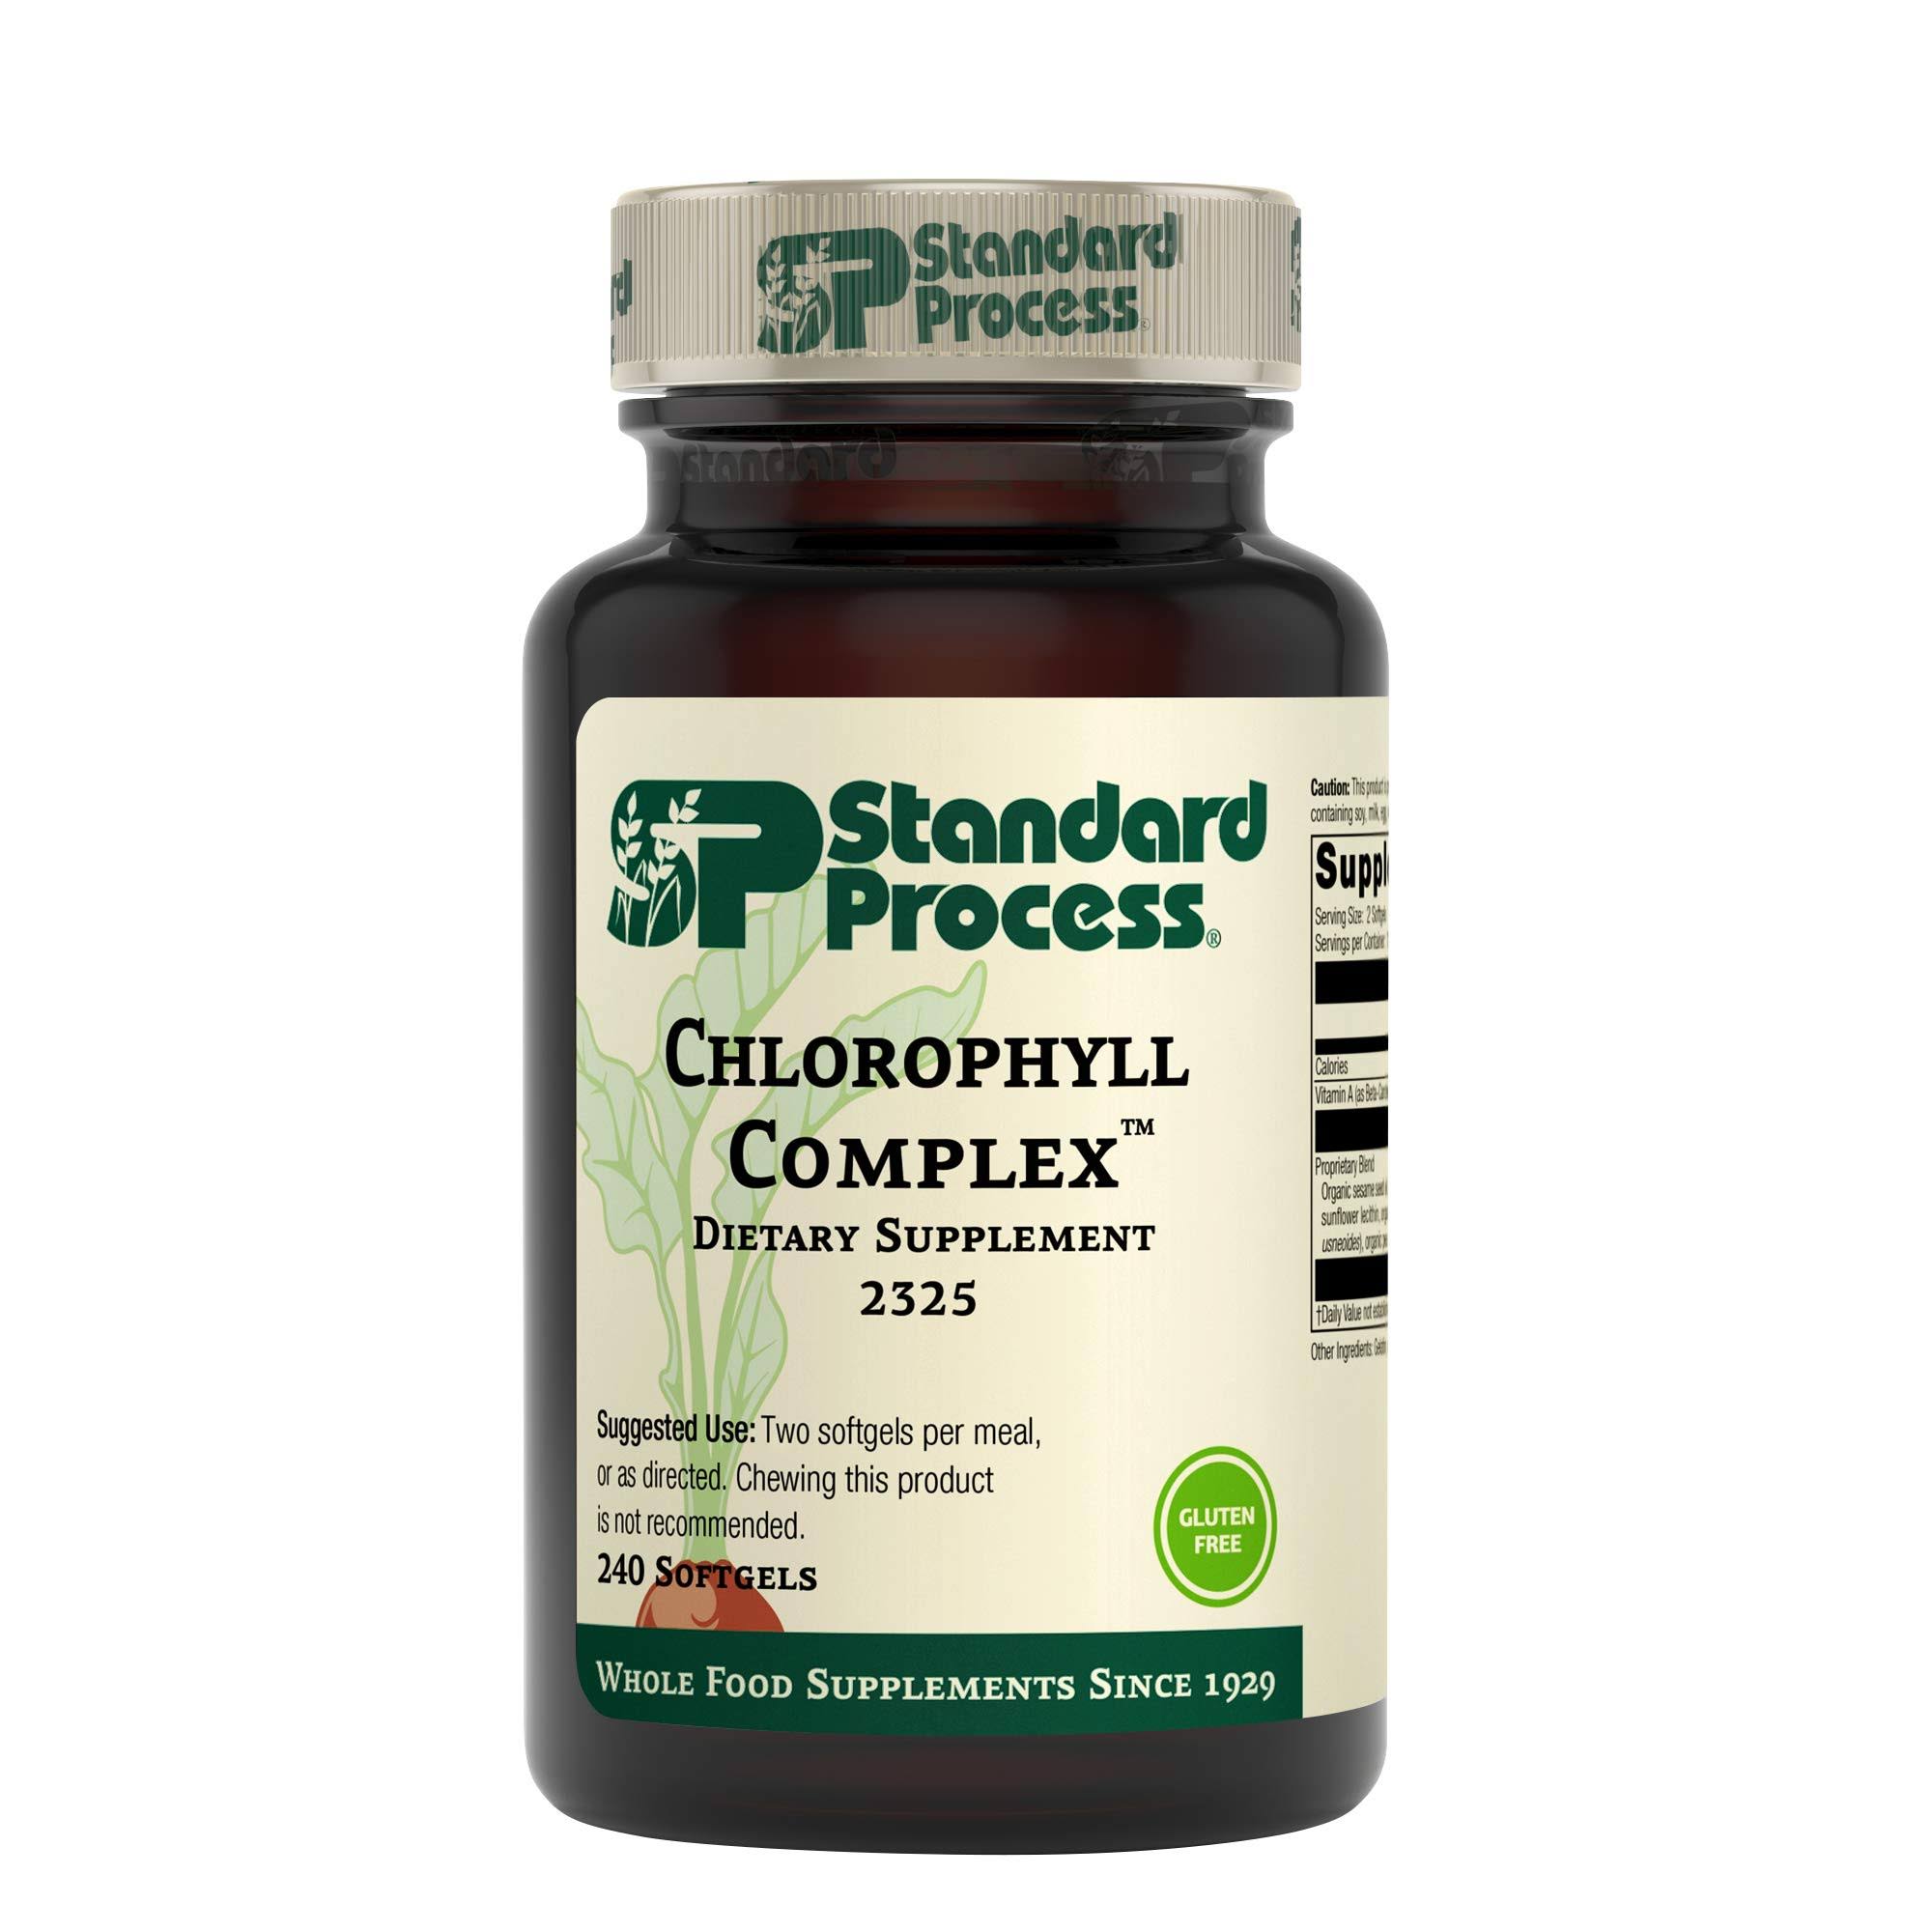 Standard Process Chlorophyll Complex - Immune Support, Antioxidant Act